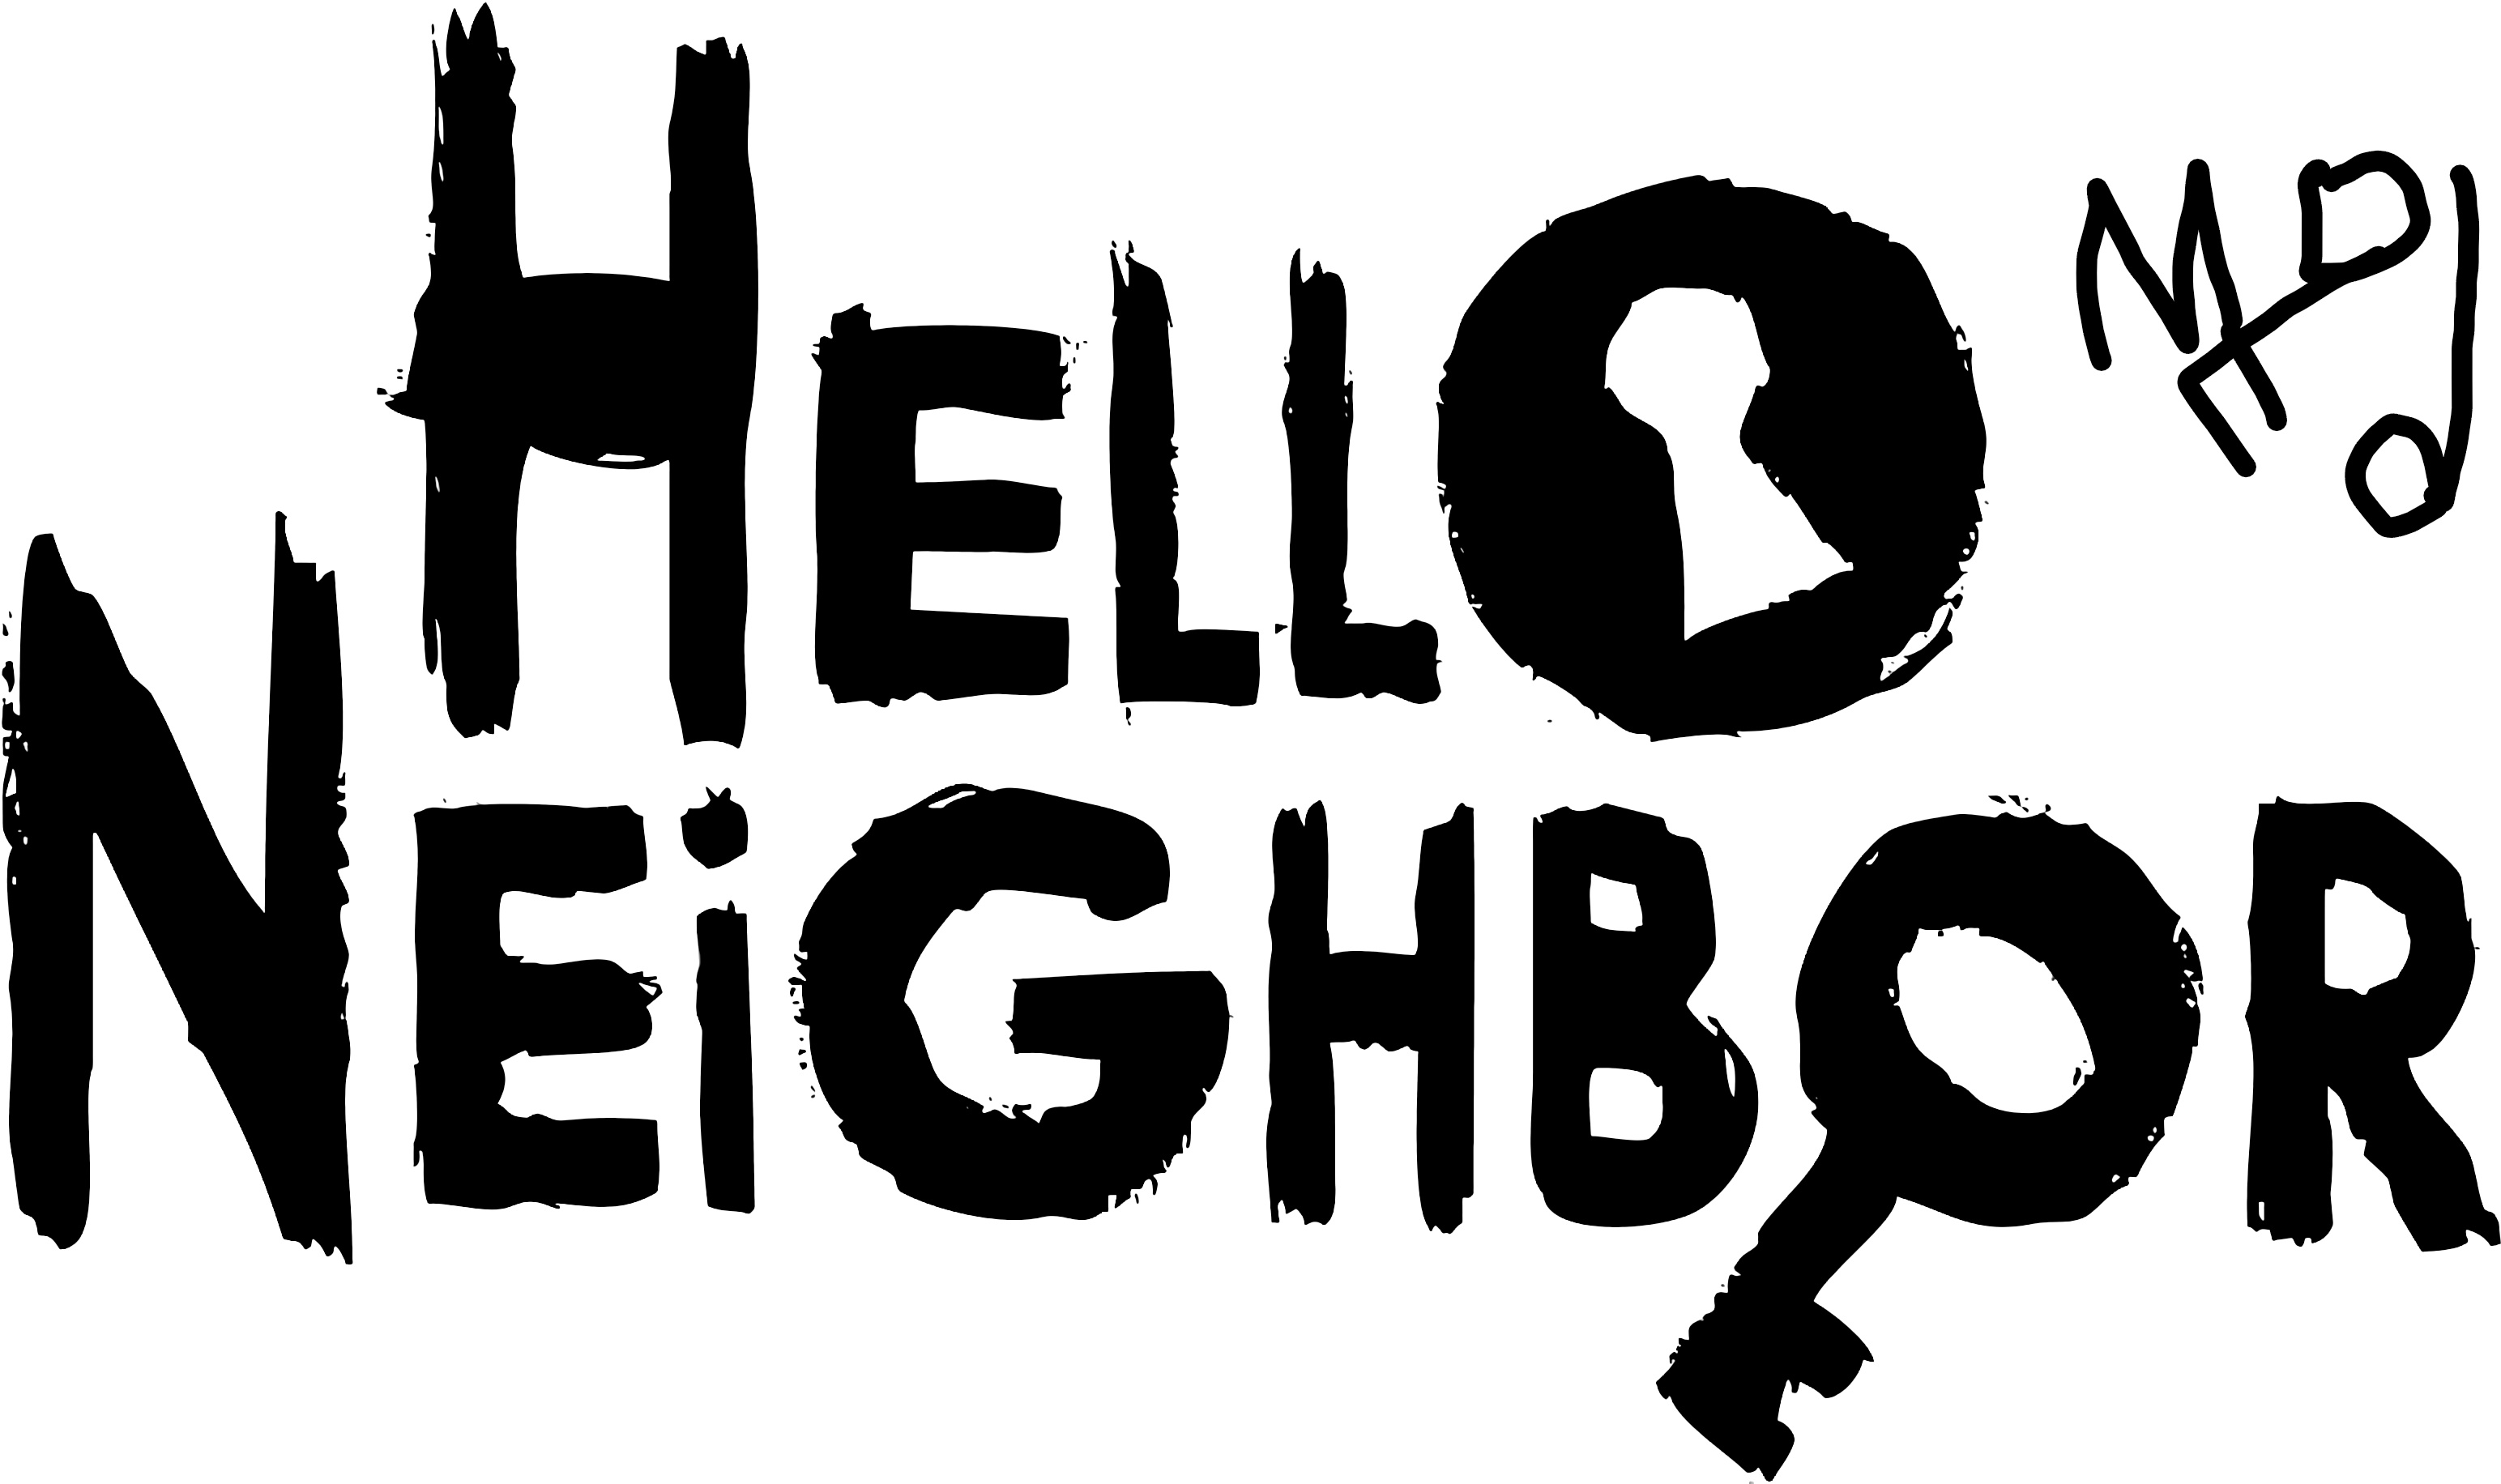 Neighbor invites